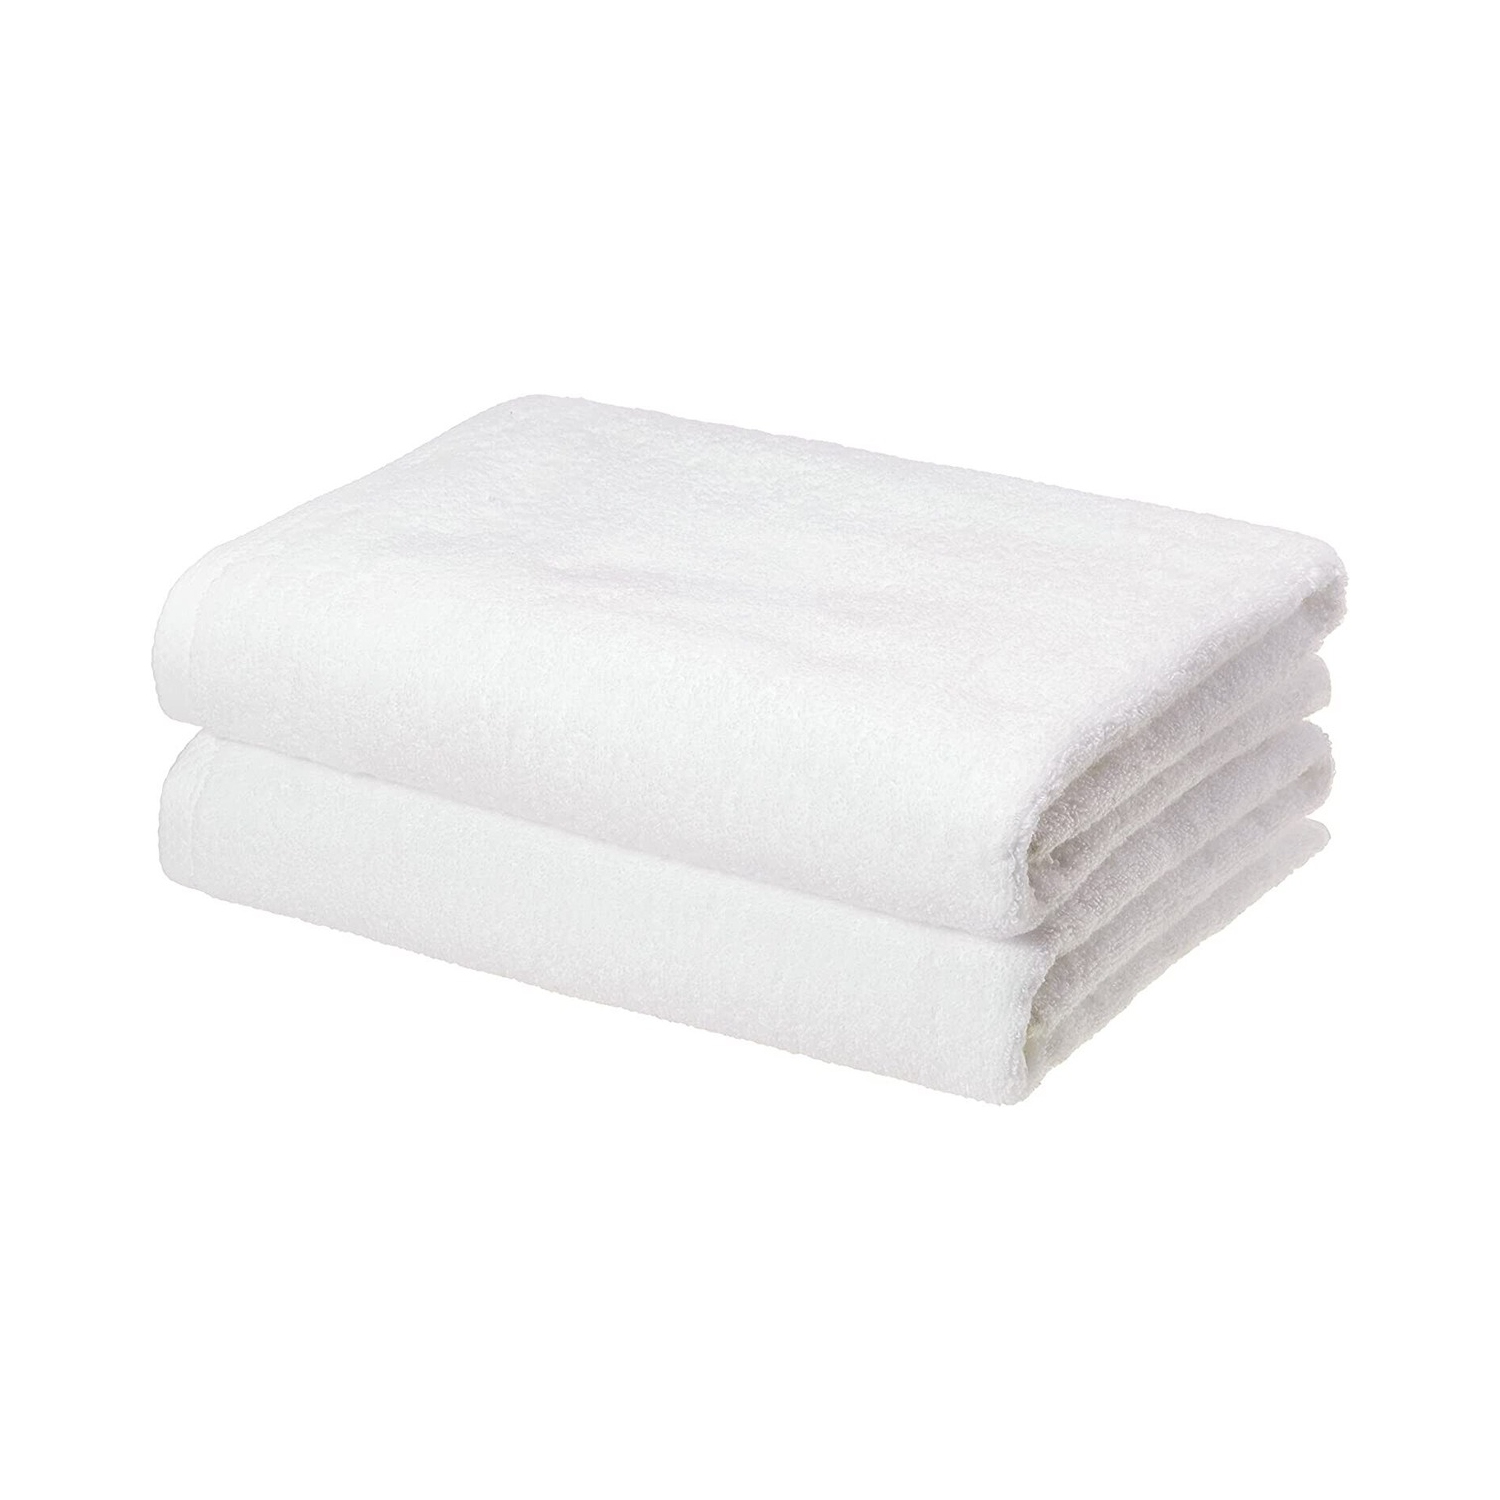 AmazonBasics 30x54 Inches 100% Cotton Premium Luxury Quick-Dry Bath Towels Set of 2 - White